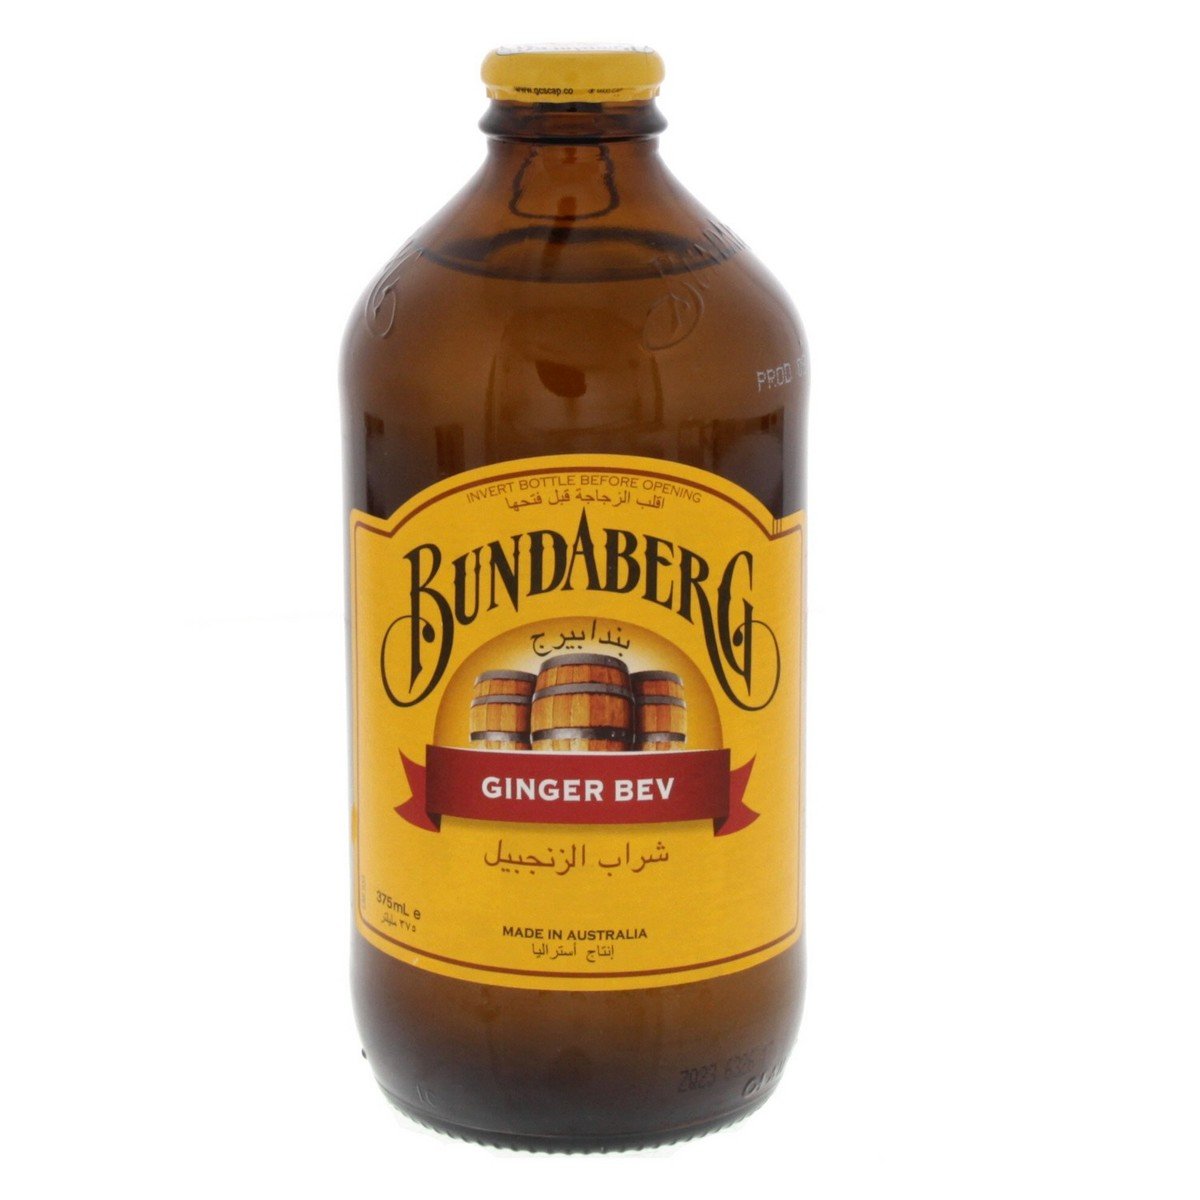 Bundaberg Ginger Bev 4 x 375 ml